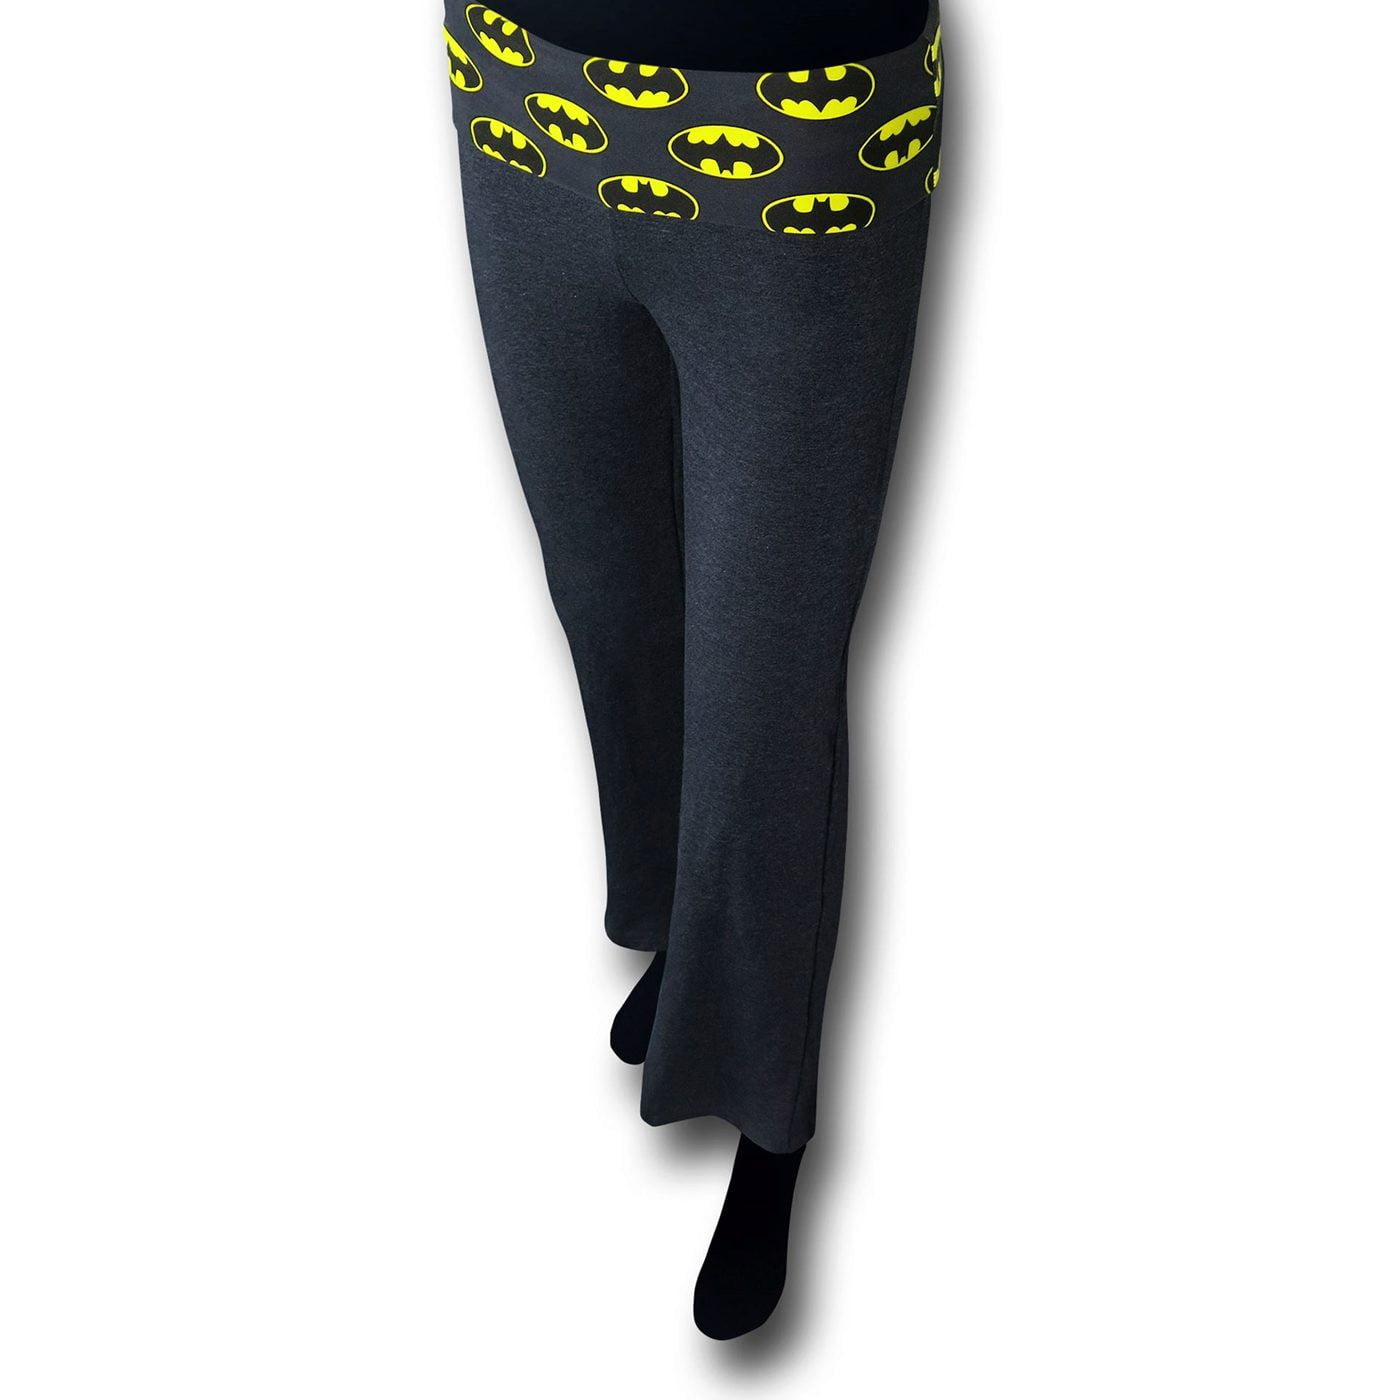 Batman Symbols Women's Heather Charcoal Yoga Pants-Large 